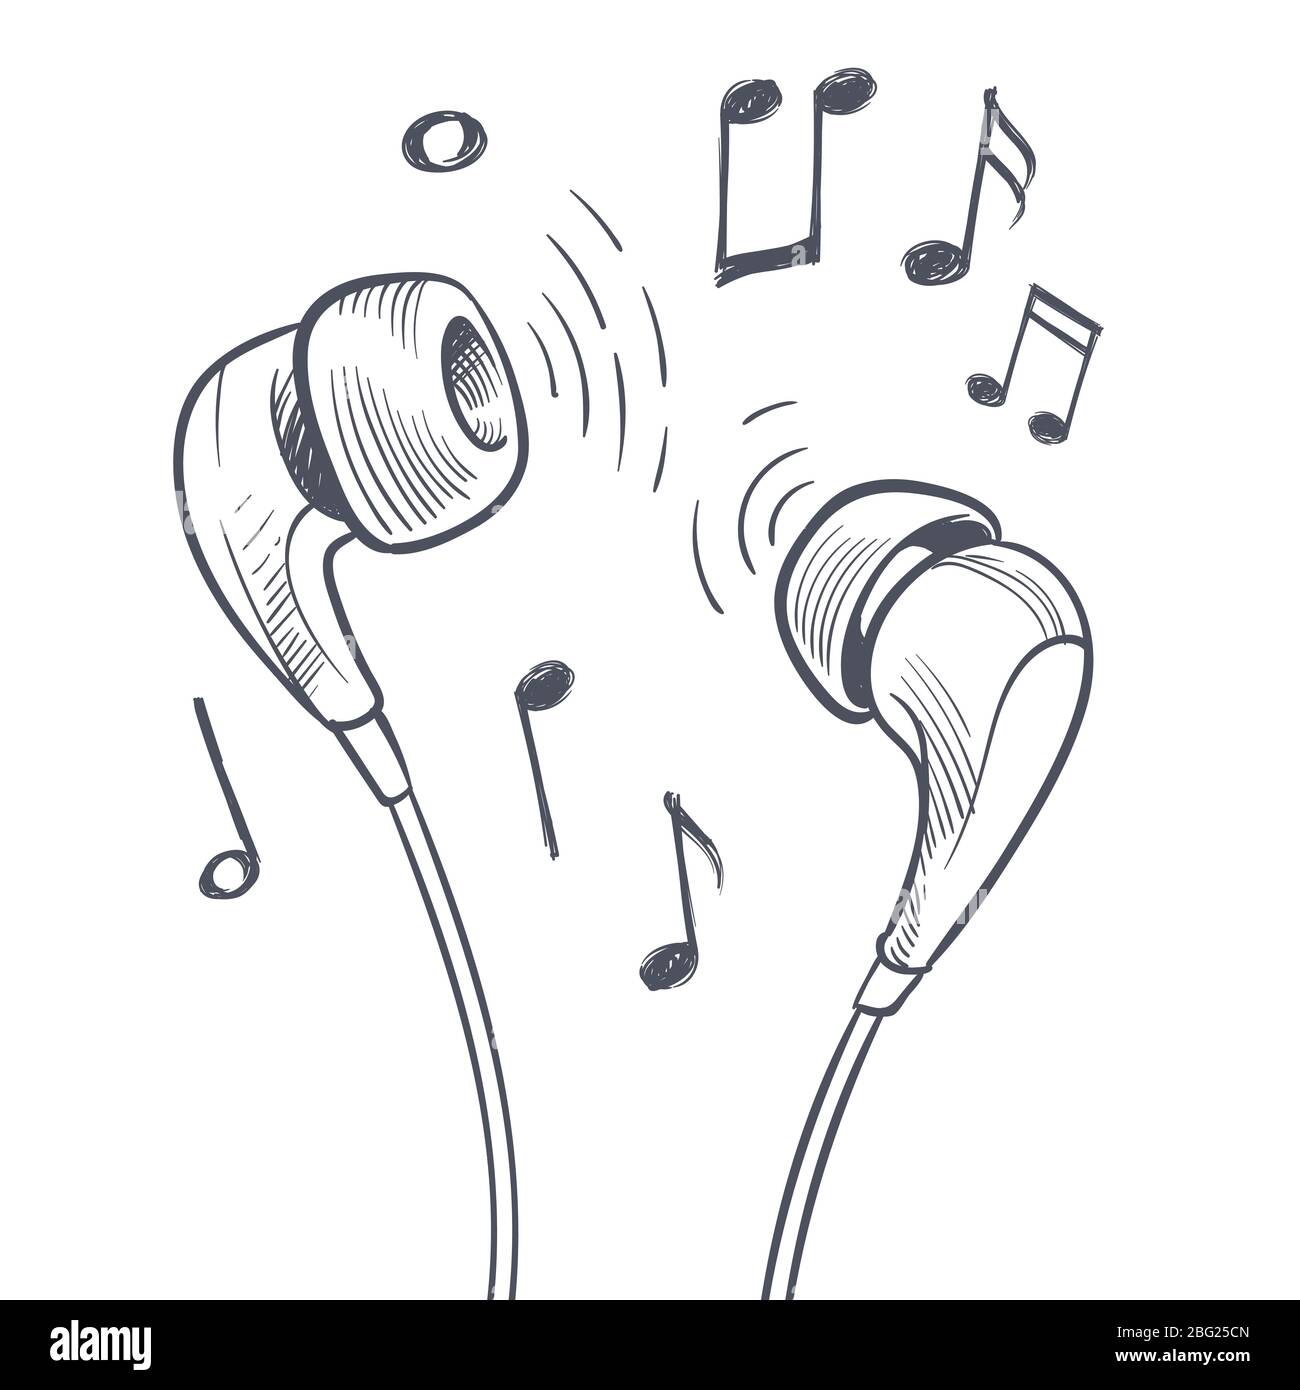 Auriculares dibujados a mano y notas musicales fideos concepto vectorial de  música electrónica. Dibujo de música de auriculares audio ilustración  musical Imagen Vector de stock - Alamy